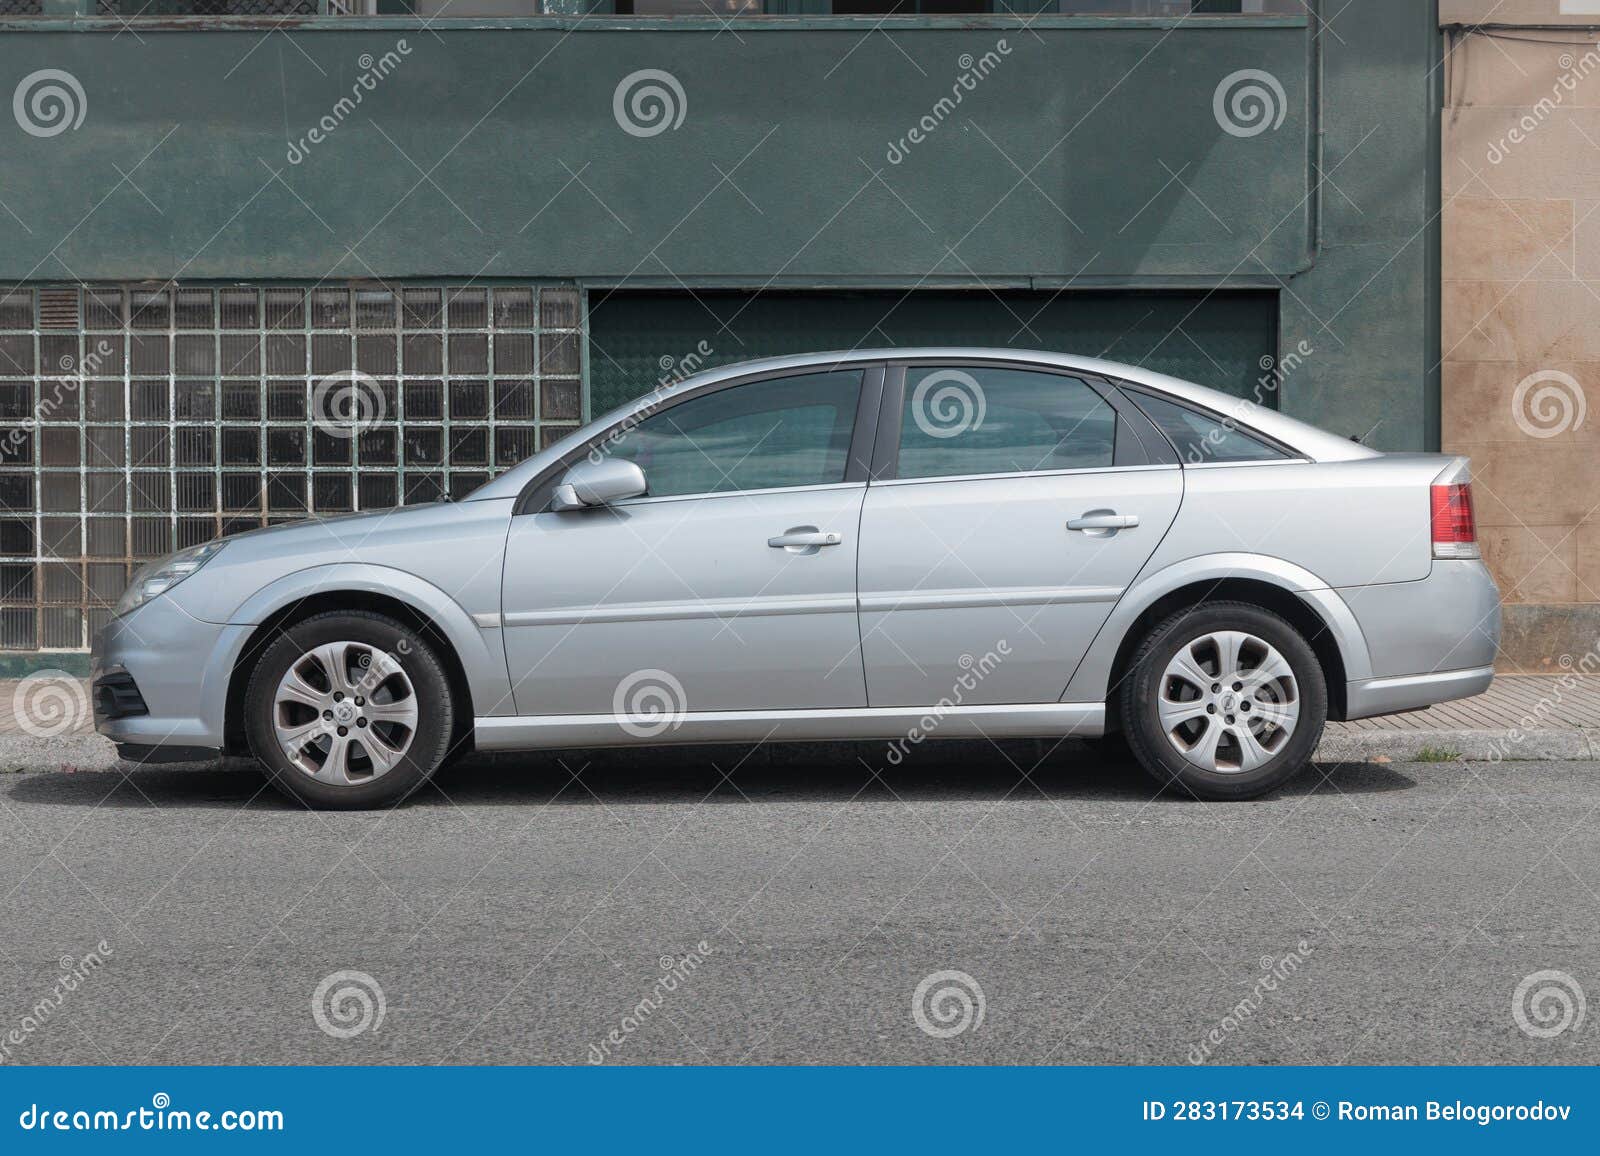 Opel Vectra C Hatchback editorial stock image. Image of elegant - 283173534